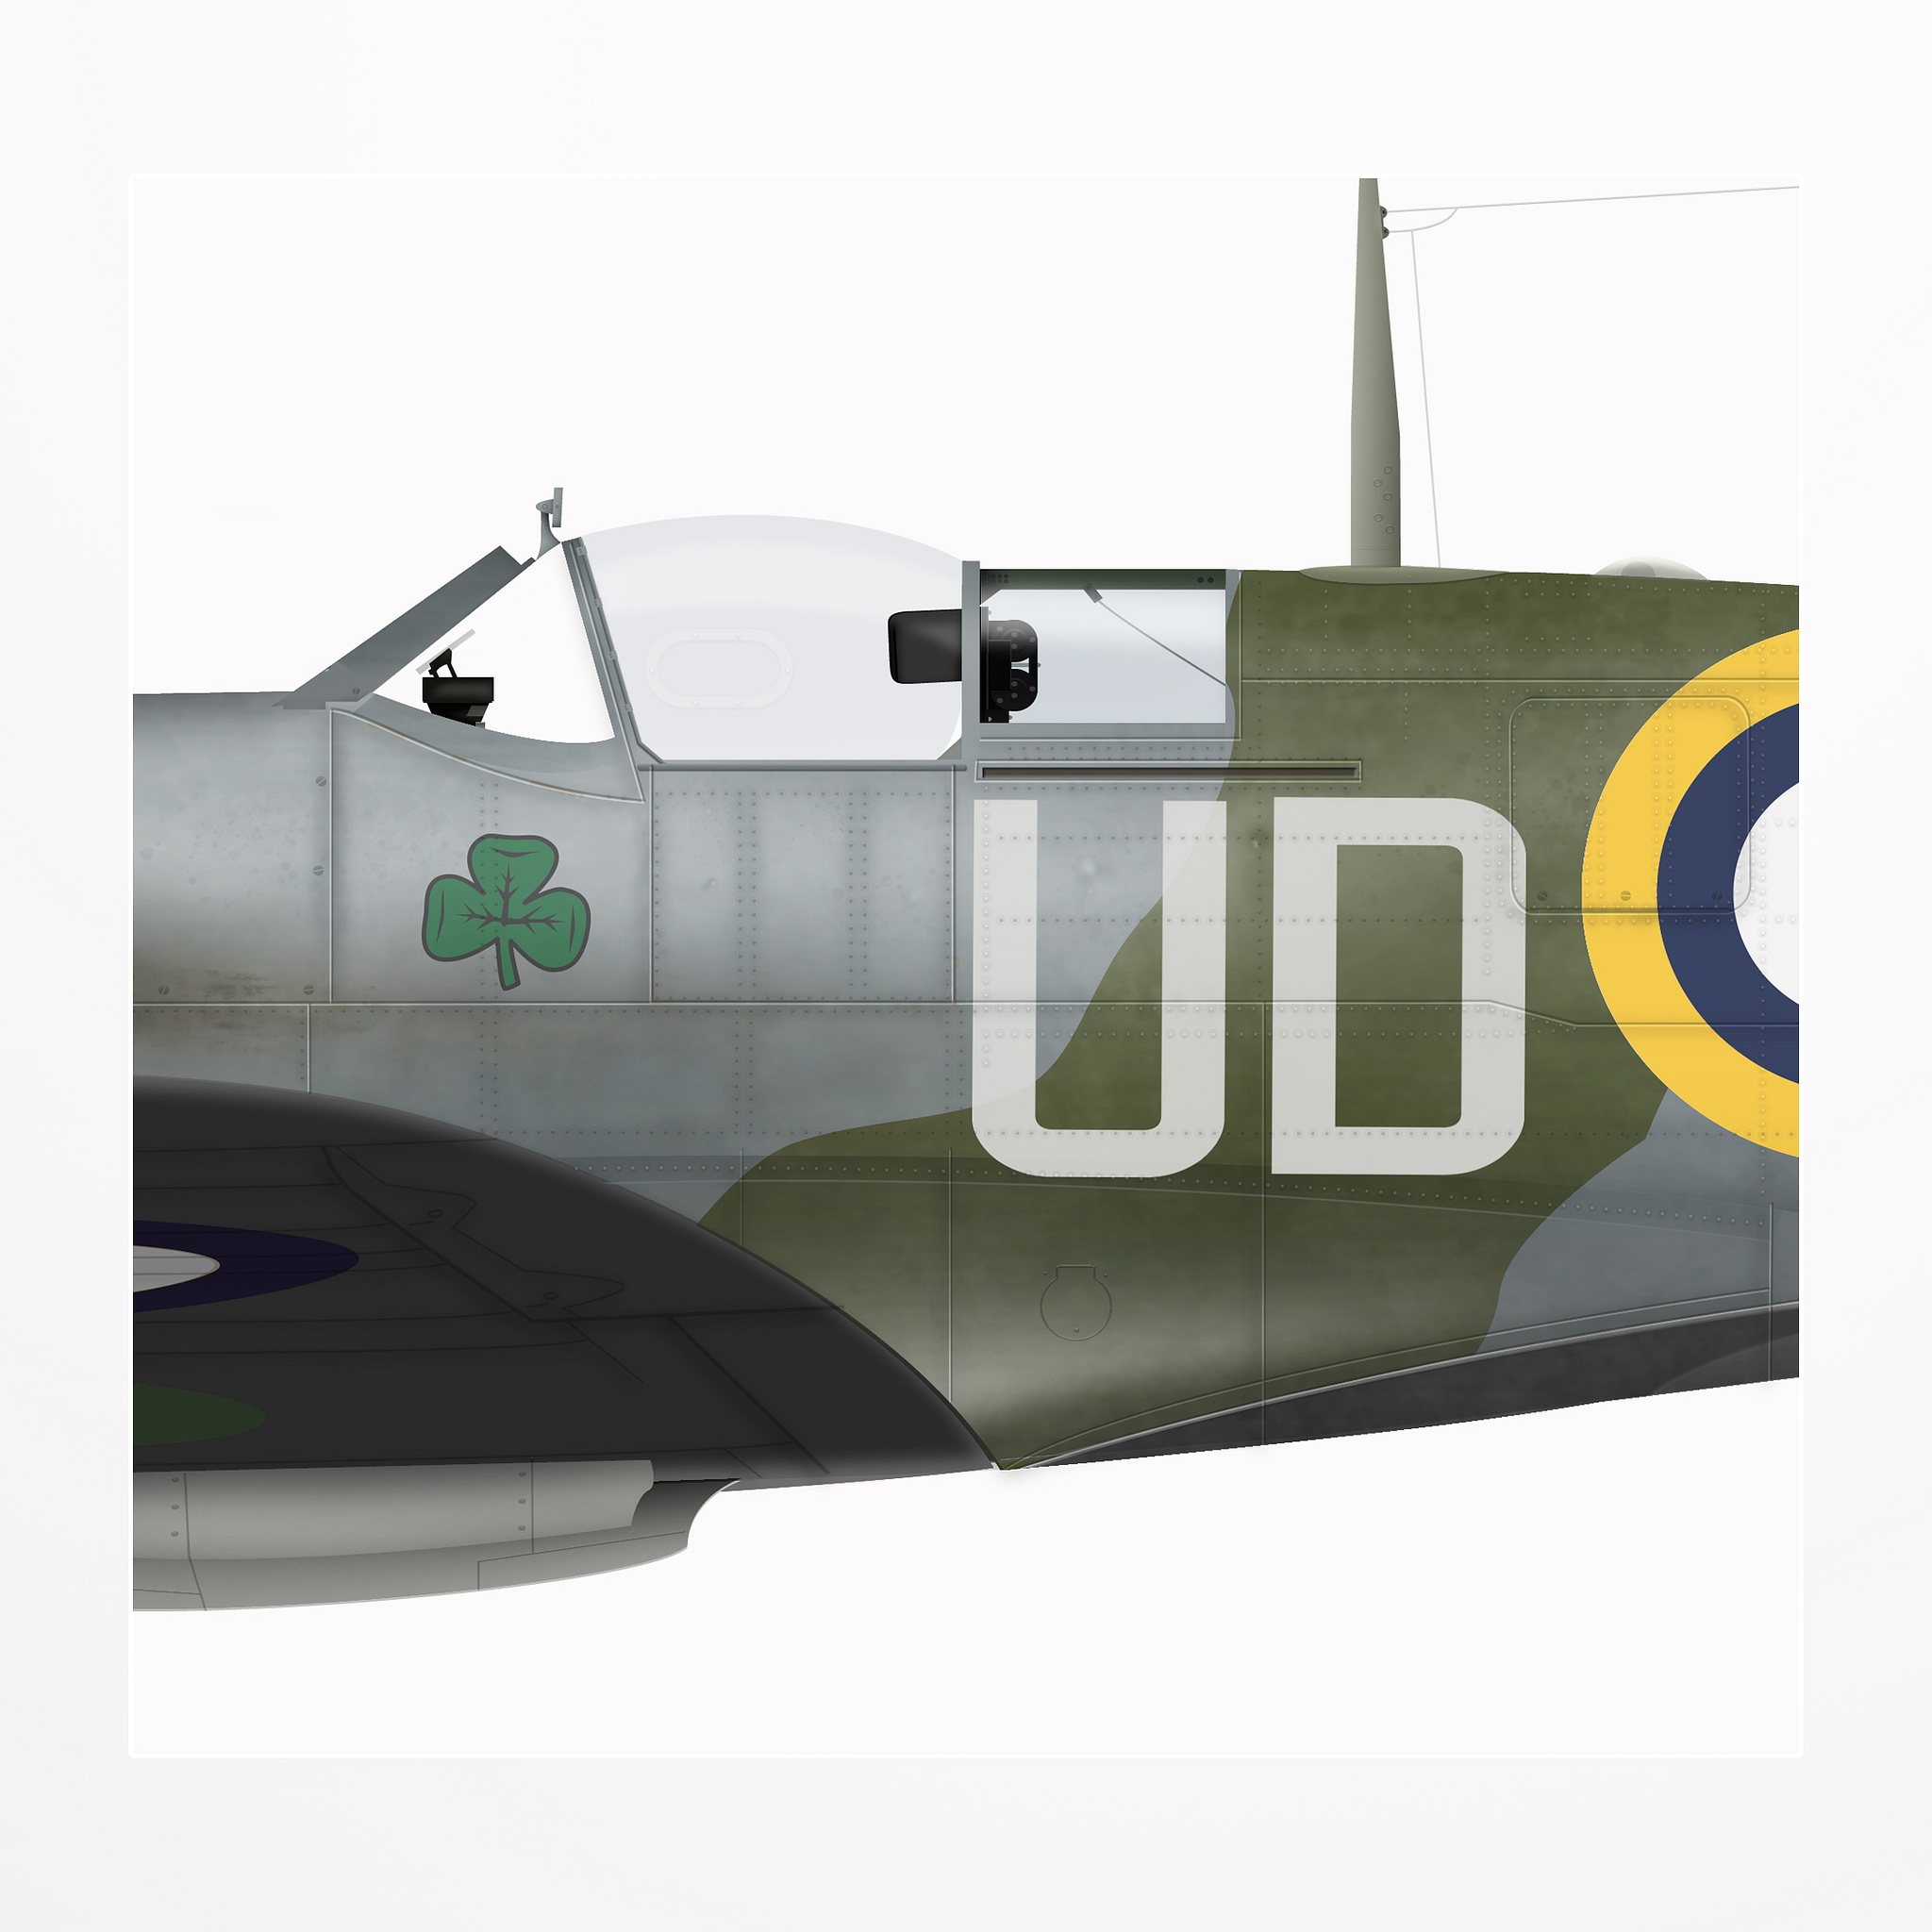 Supermarine Spitfire Mk Vb, UD-W (AB852) 452 Sqn 8